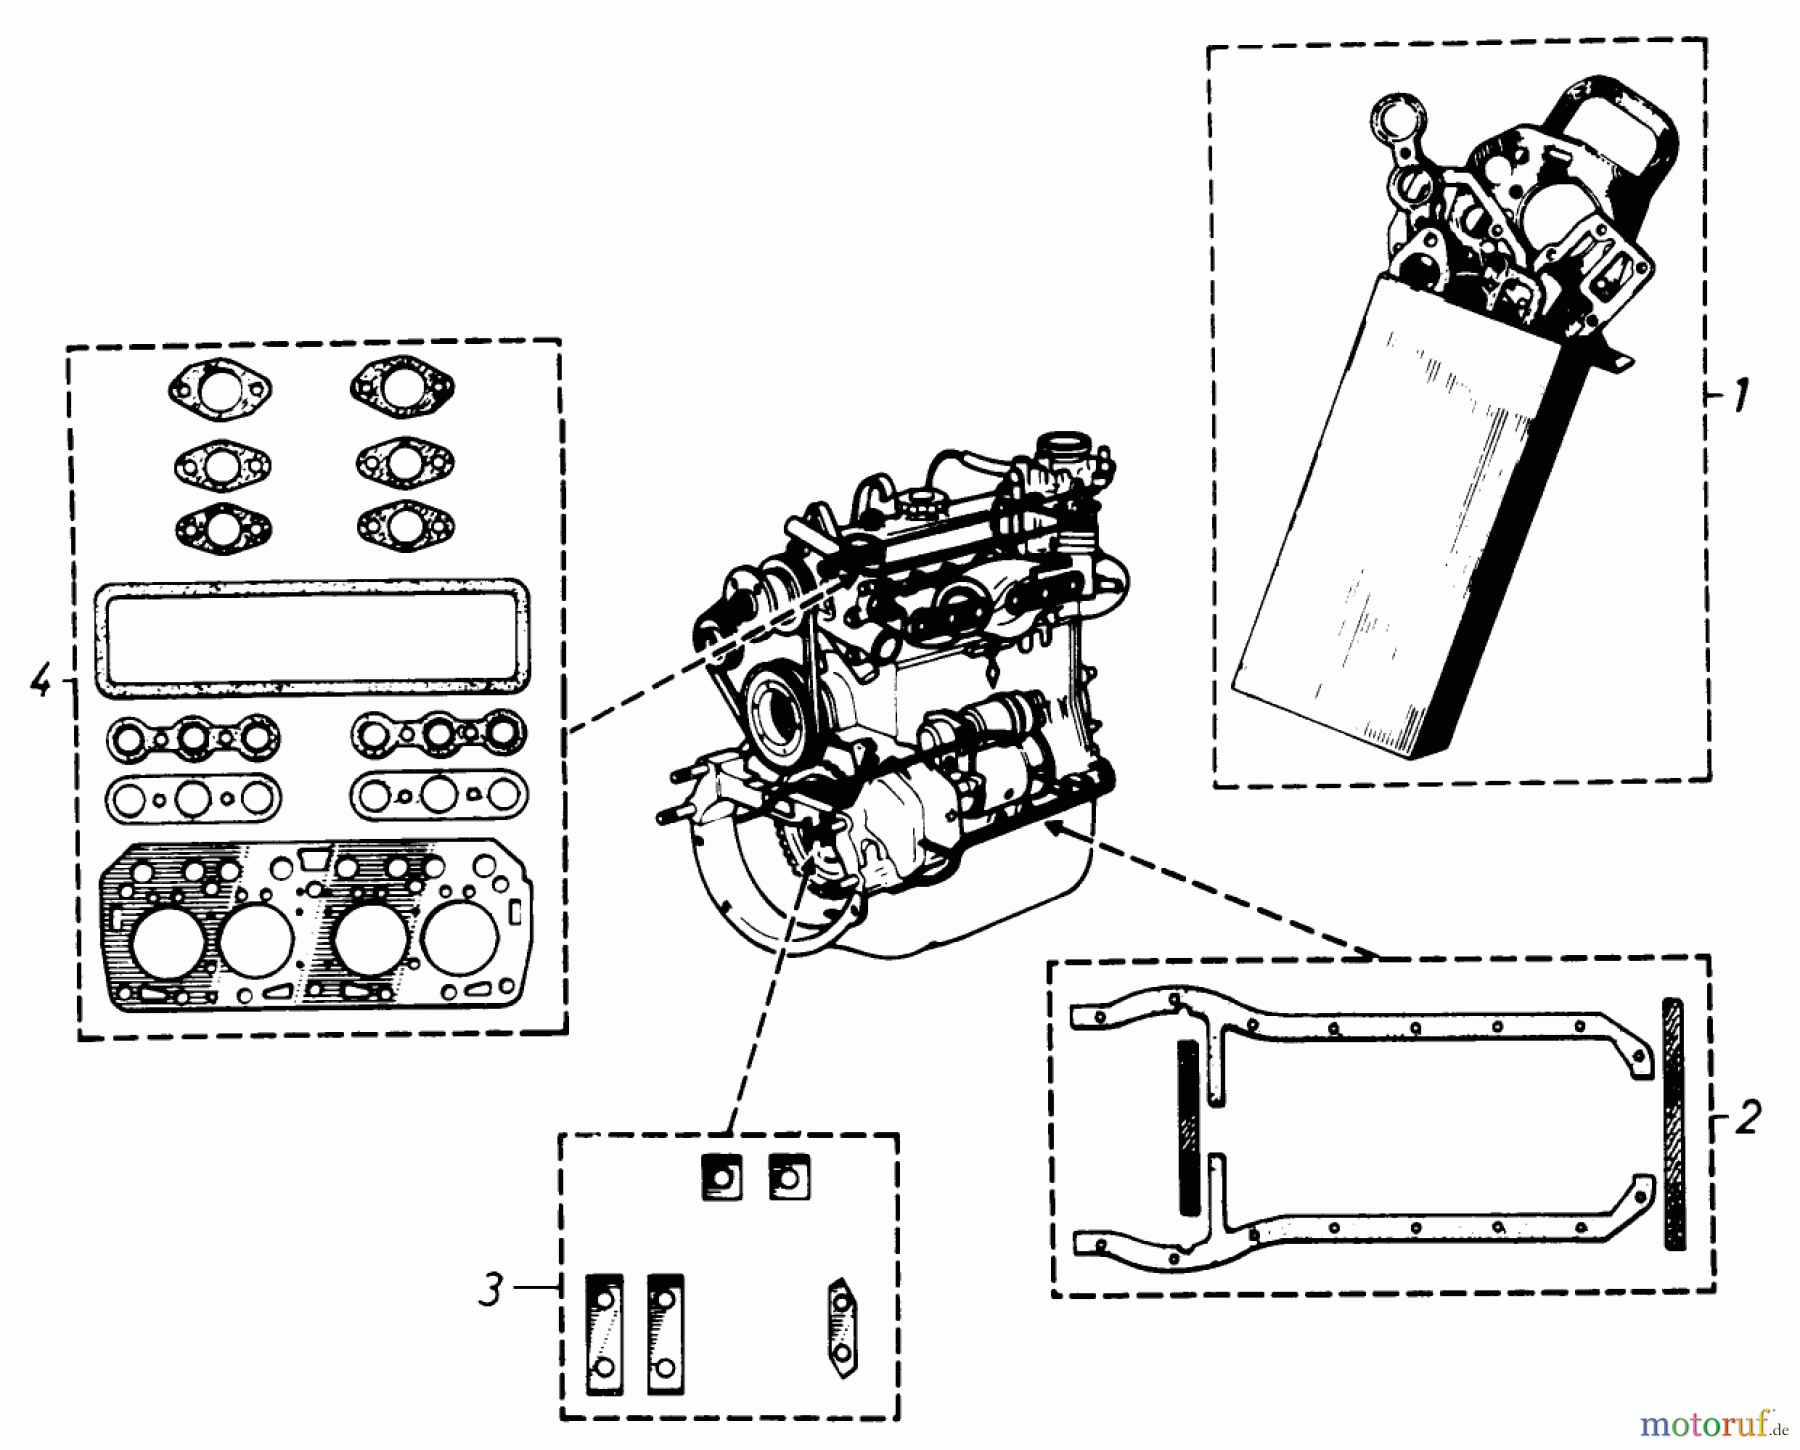  Toro Neu Mowers, Lawn & Garden Tractor Seite 1 61-20RG01 (D-250) - Toro D-250 10-Speed Tractor, 1977 GASKET SETS